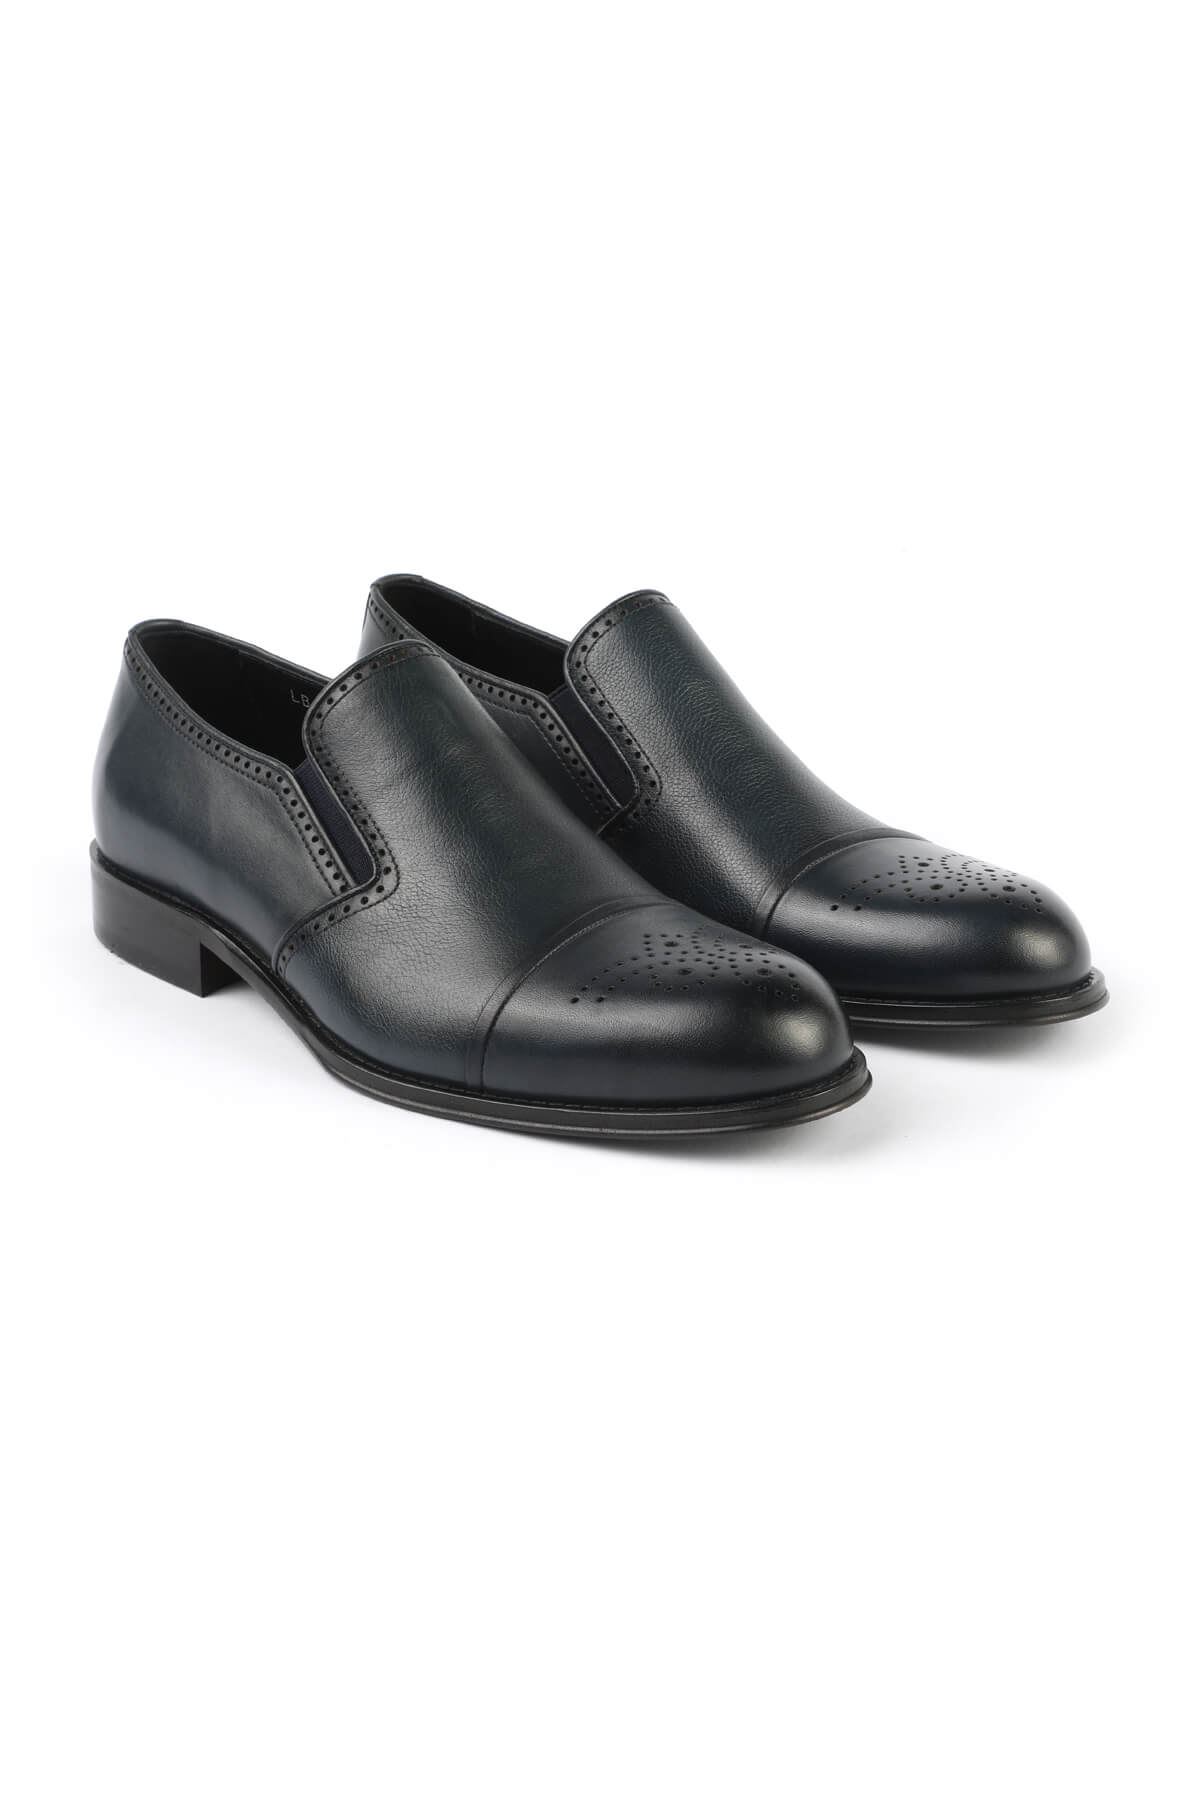 Libero 2871 Black Classic Shoes